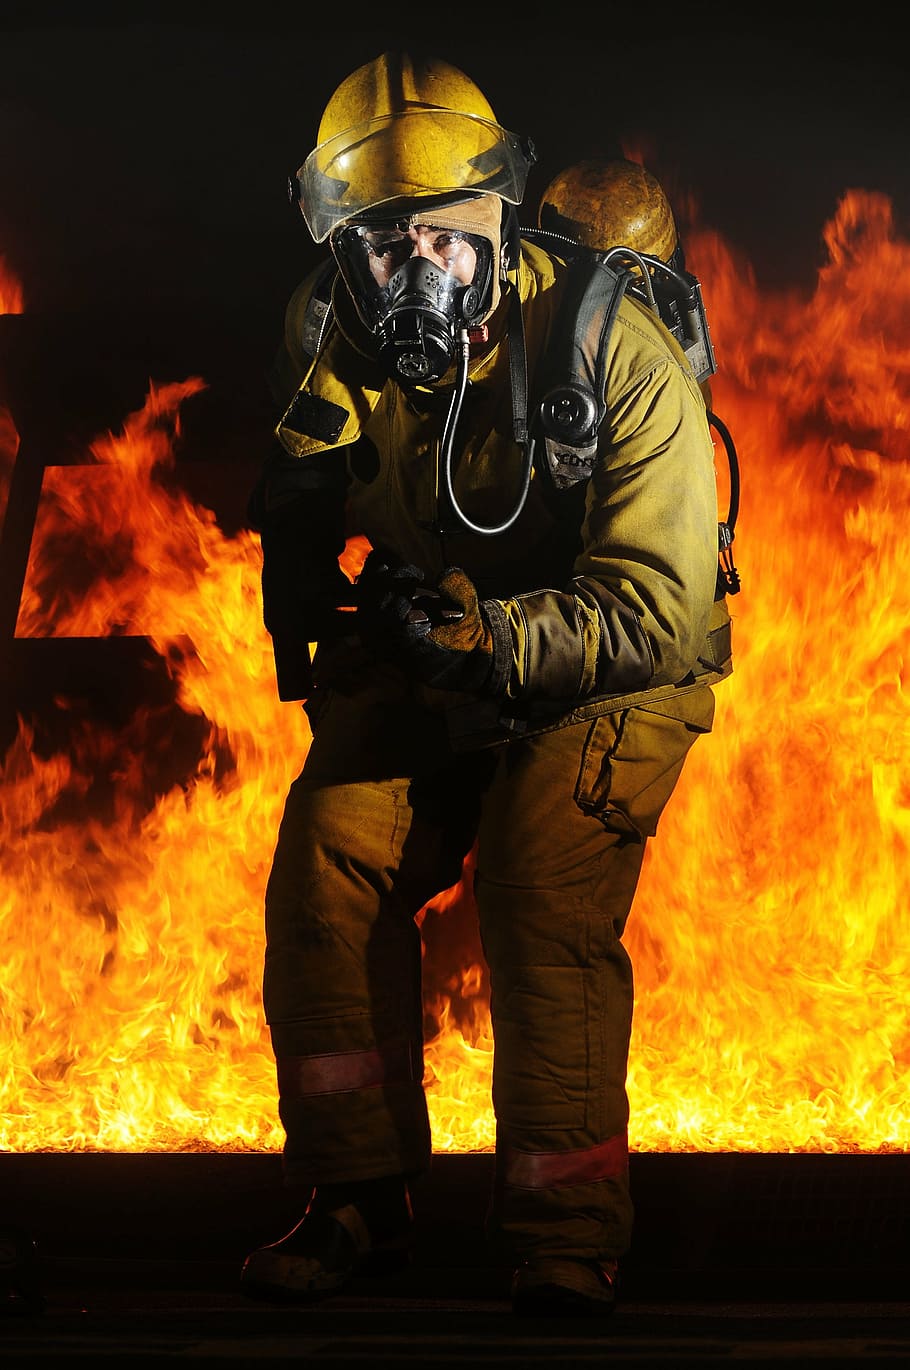 bombero, fondo de fuego, fuego, retrato, capacitación, monitor, caliente, calor, peligroso, quemar